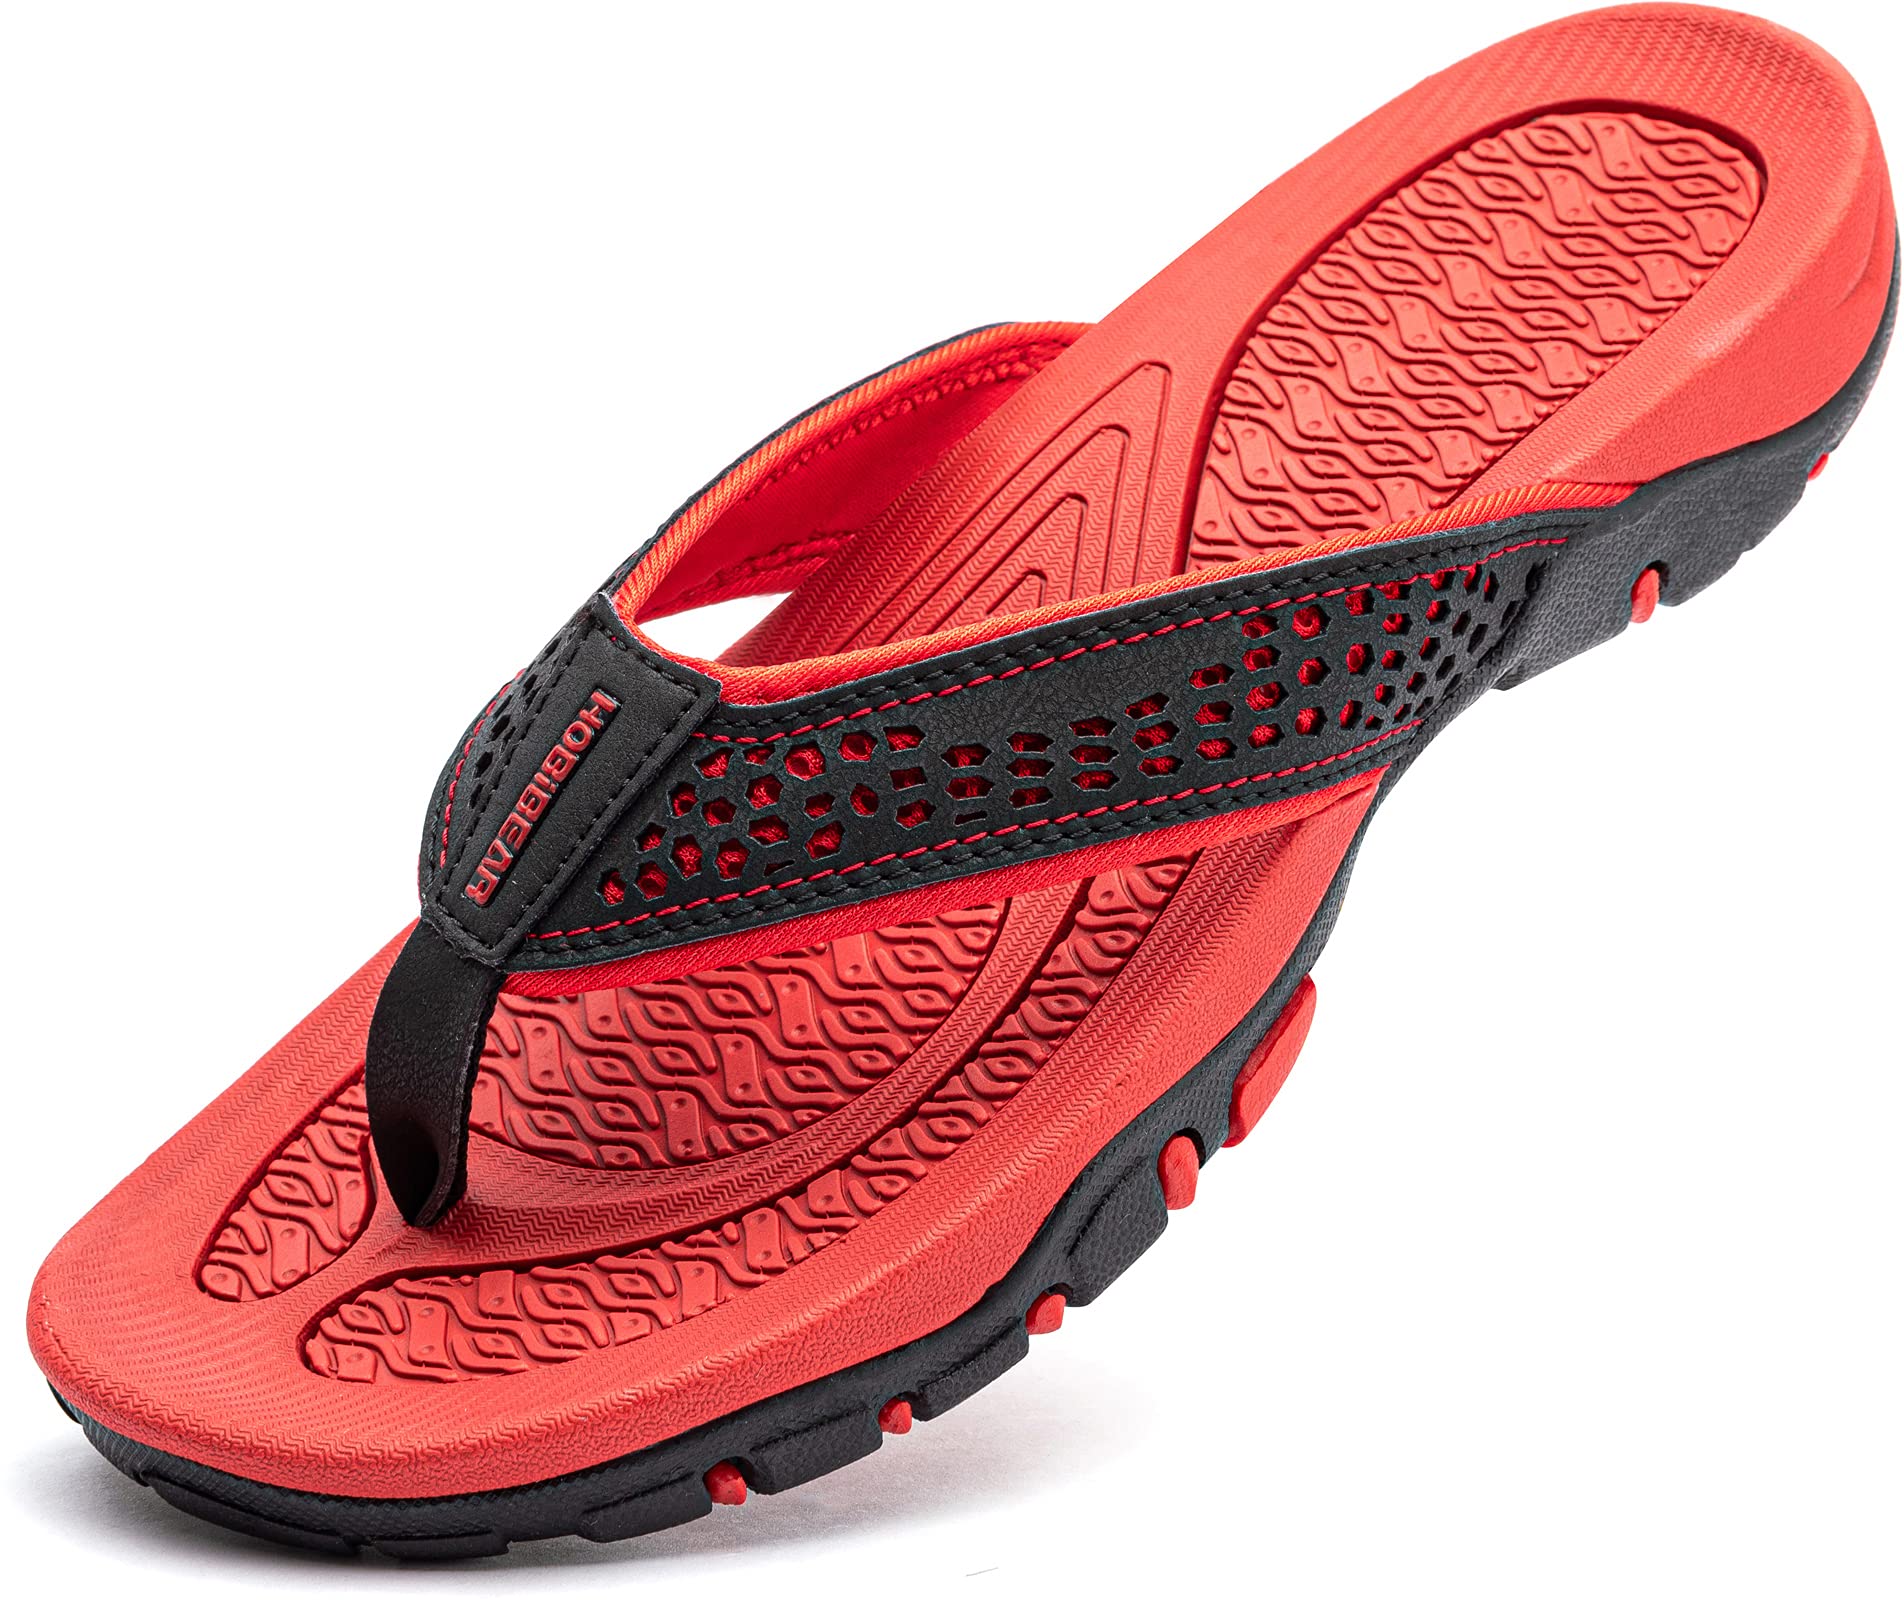  GUBARUN Mens Sport Flip Flops Comfort Casual Thong Sandals  Outdoor(Black 1, 7.5)